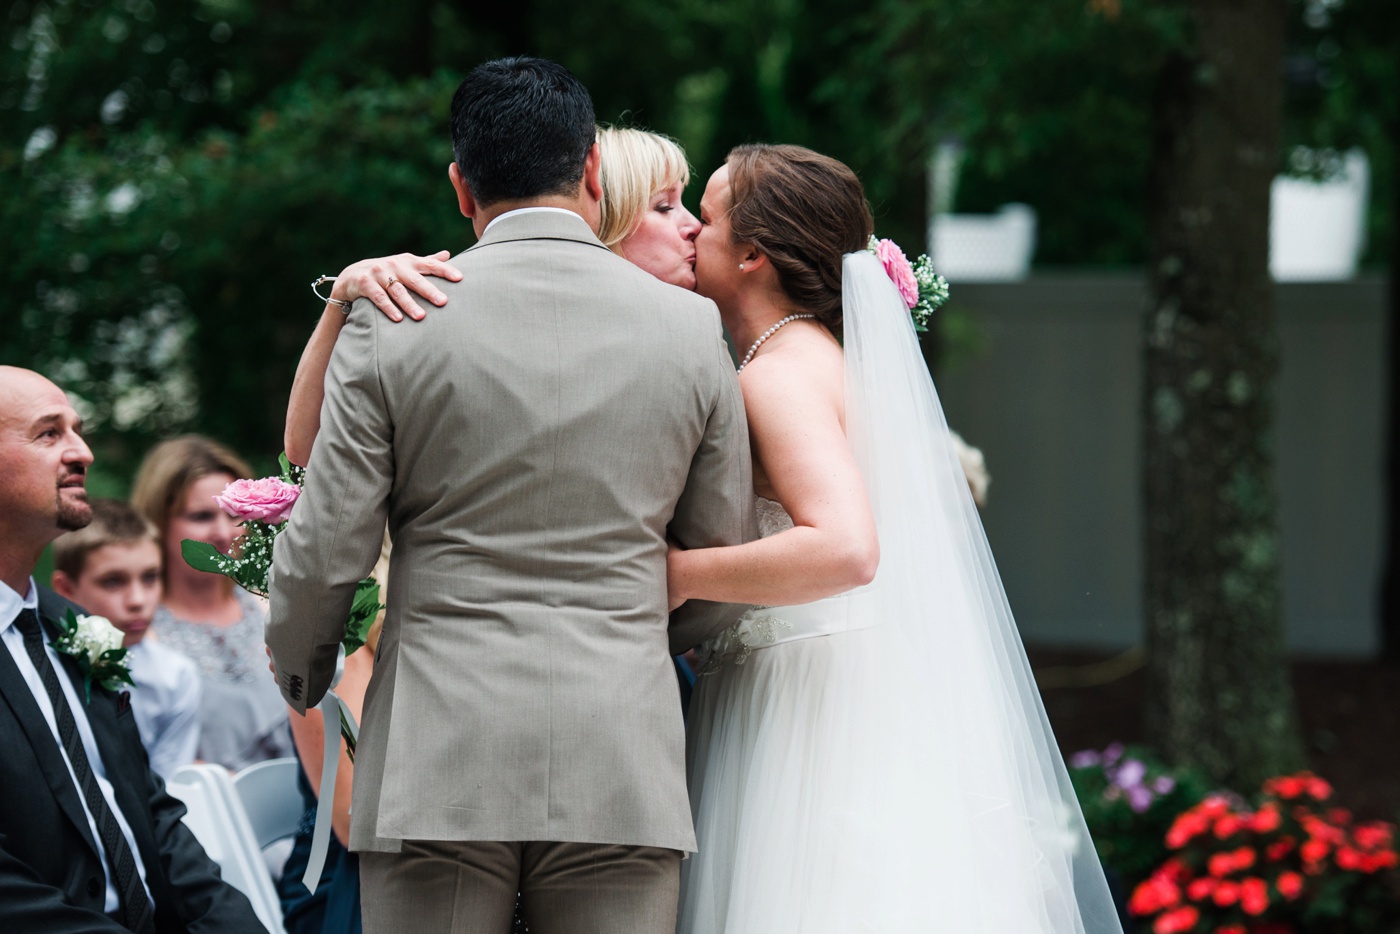 Amanda + Ruben - The Carriage House Wedding - Galloway New Jersey Photographer - Alison Dunn Photography-41